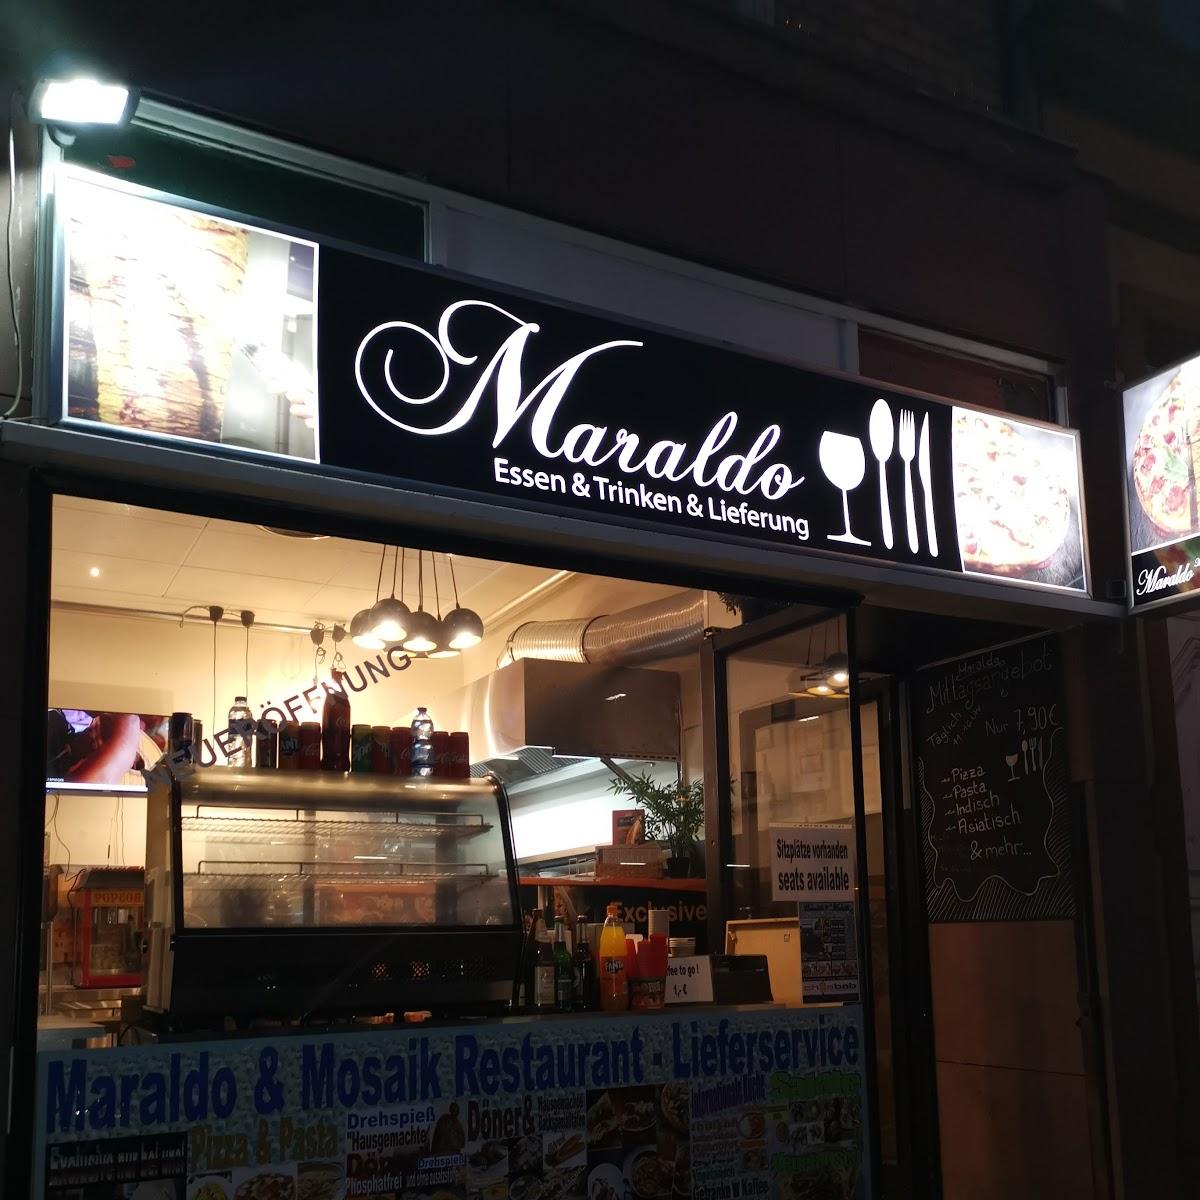 Restaurant "Maraldo & Mosaik Pizza- Pasta - Döner Lieferservice" in Frankfurt am Main